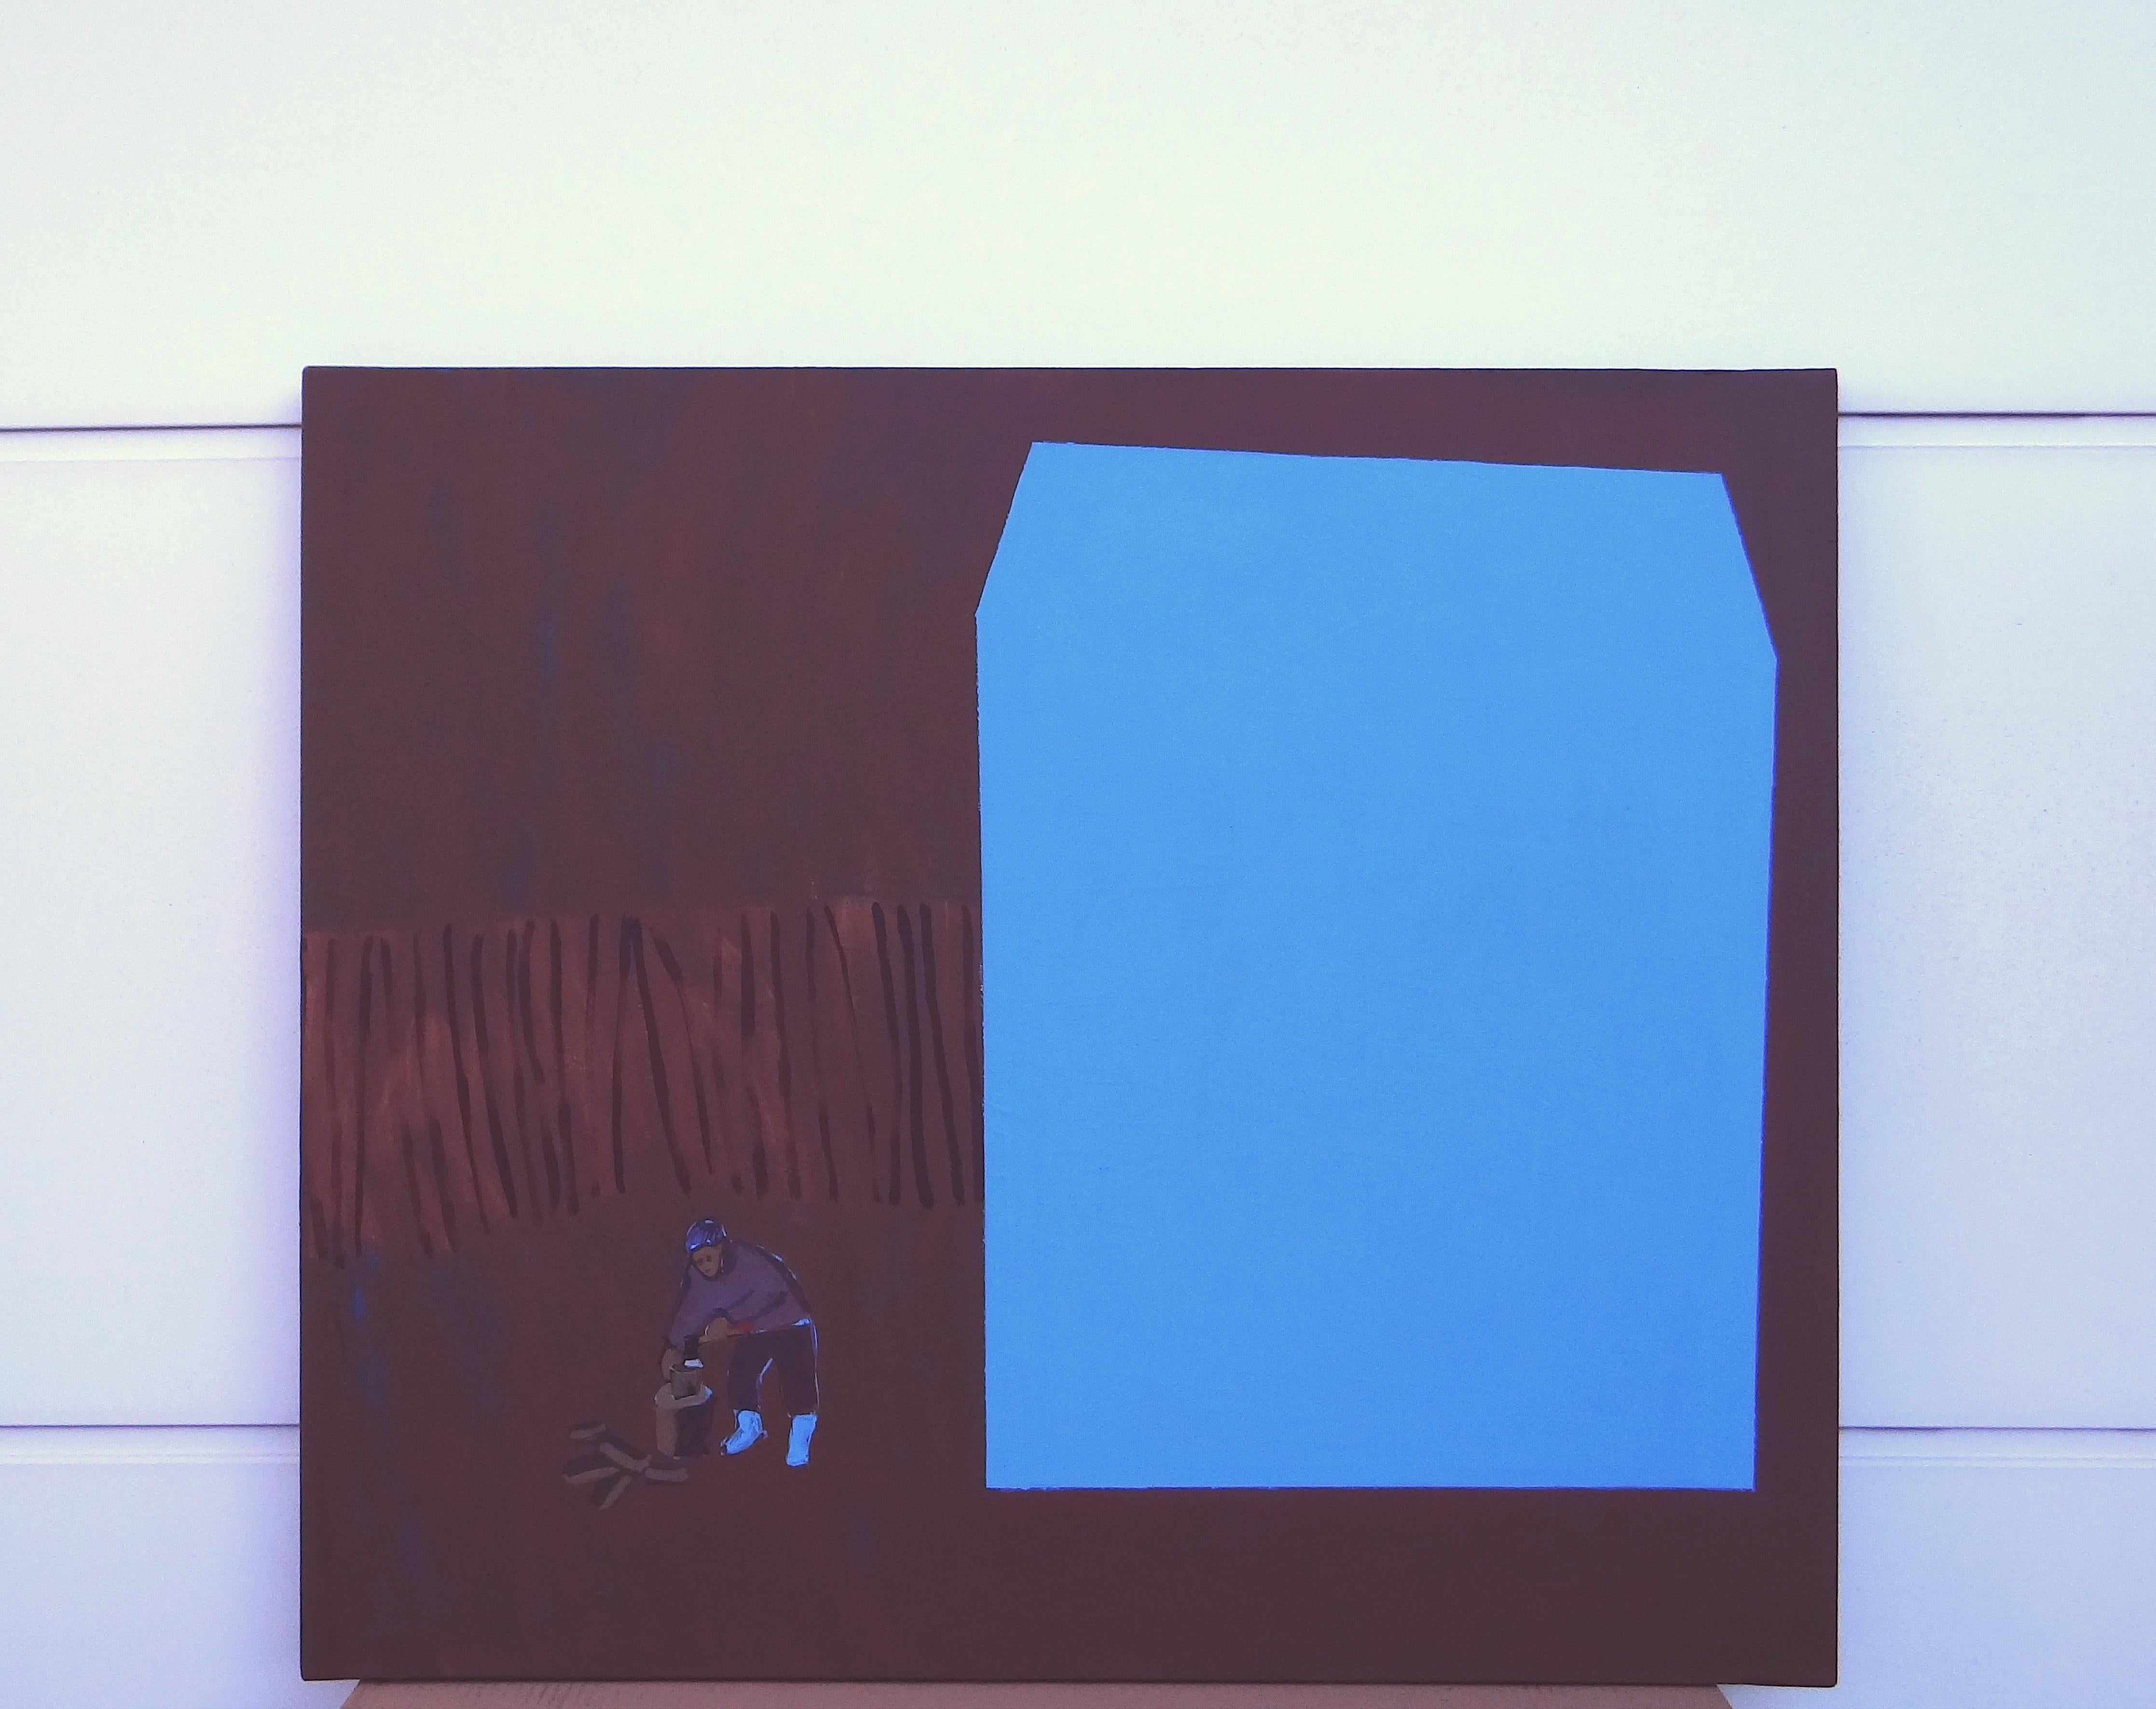 Chopping Wood - Contemporary Expressive, Symbolic and  Peinture minimaliste - Contemporain Painting par Joanna Mrozowska